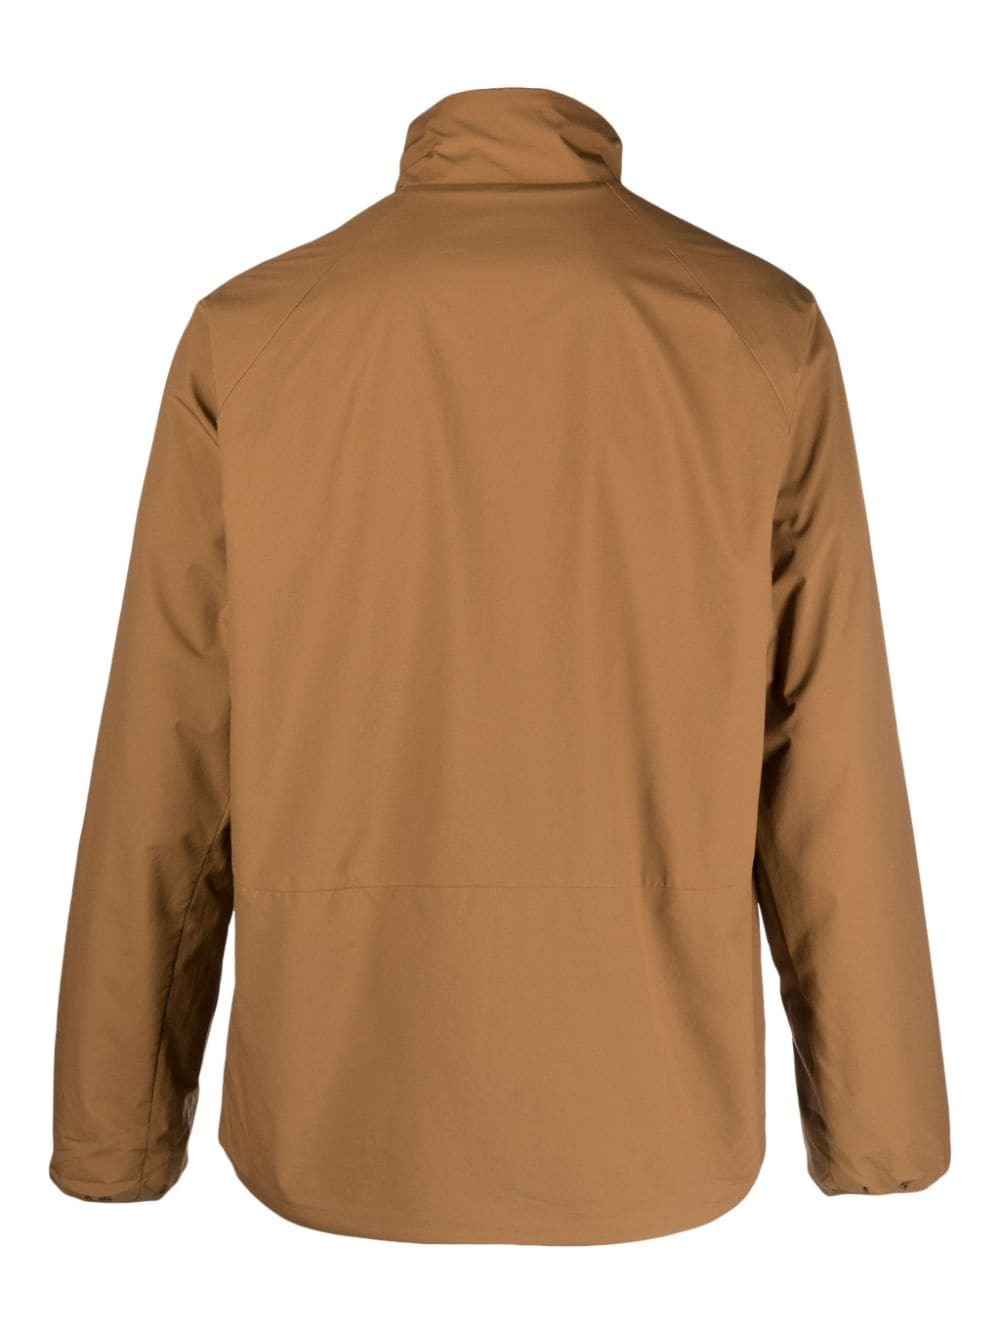 Caramel brownhigh neck jacket